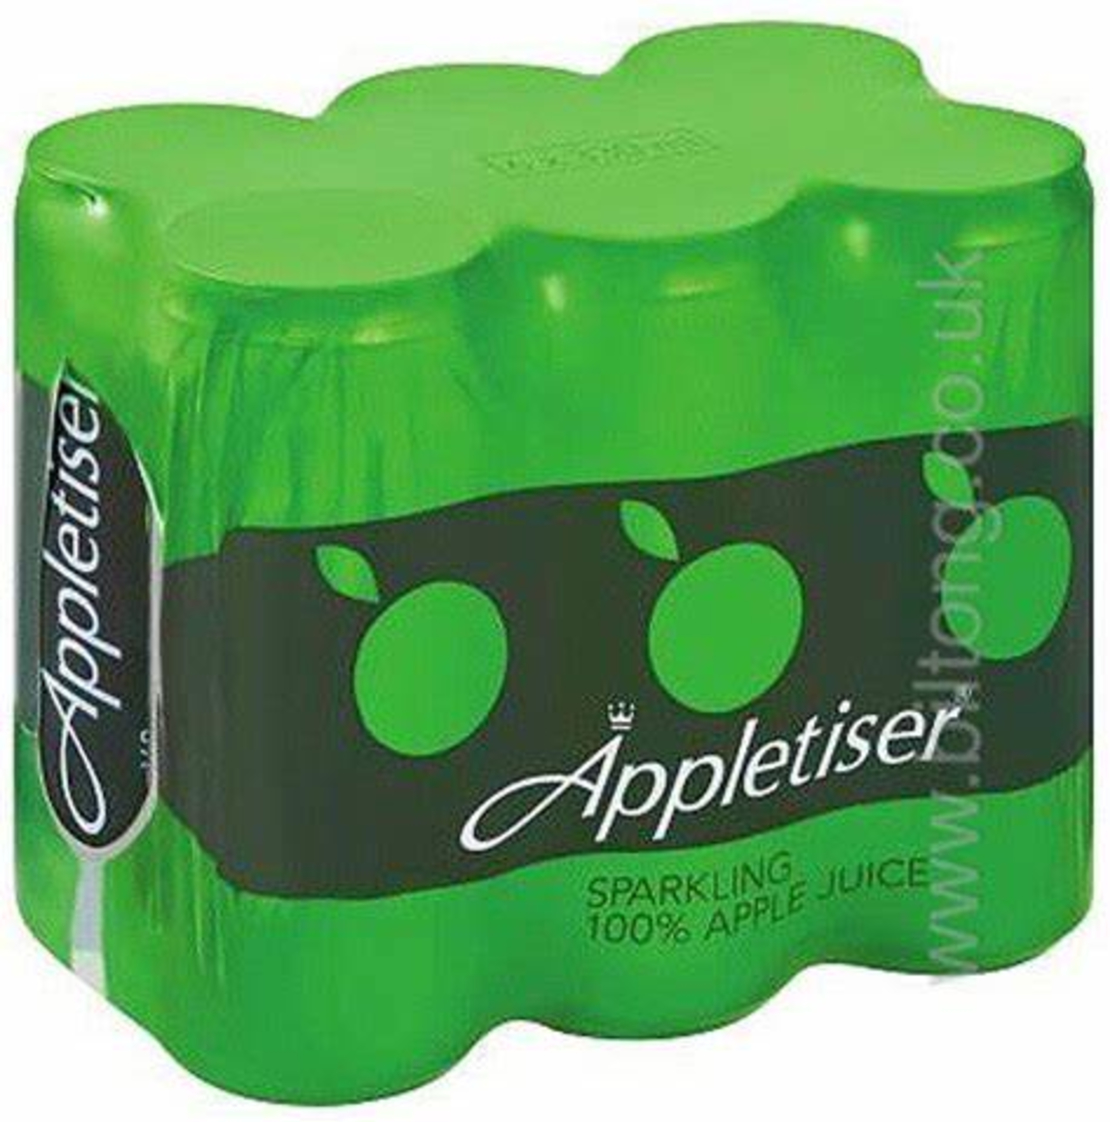 Appletiser 100% Sparkling Apple Juice 330 ml